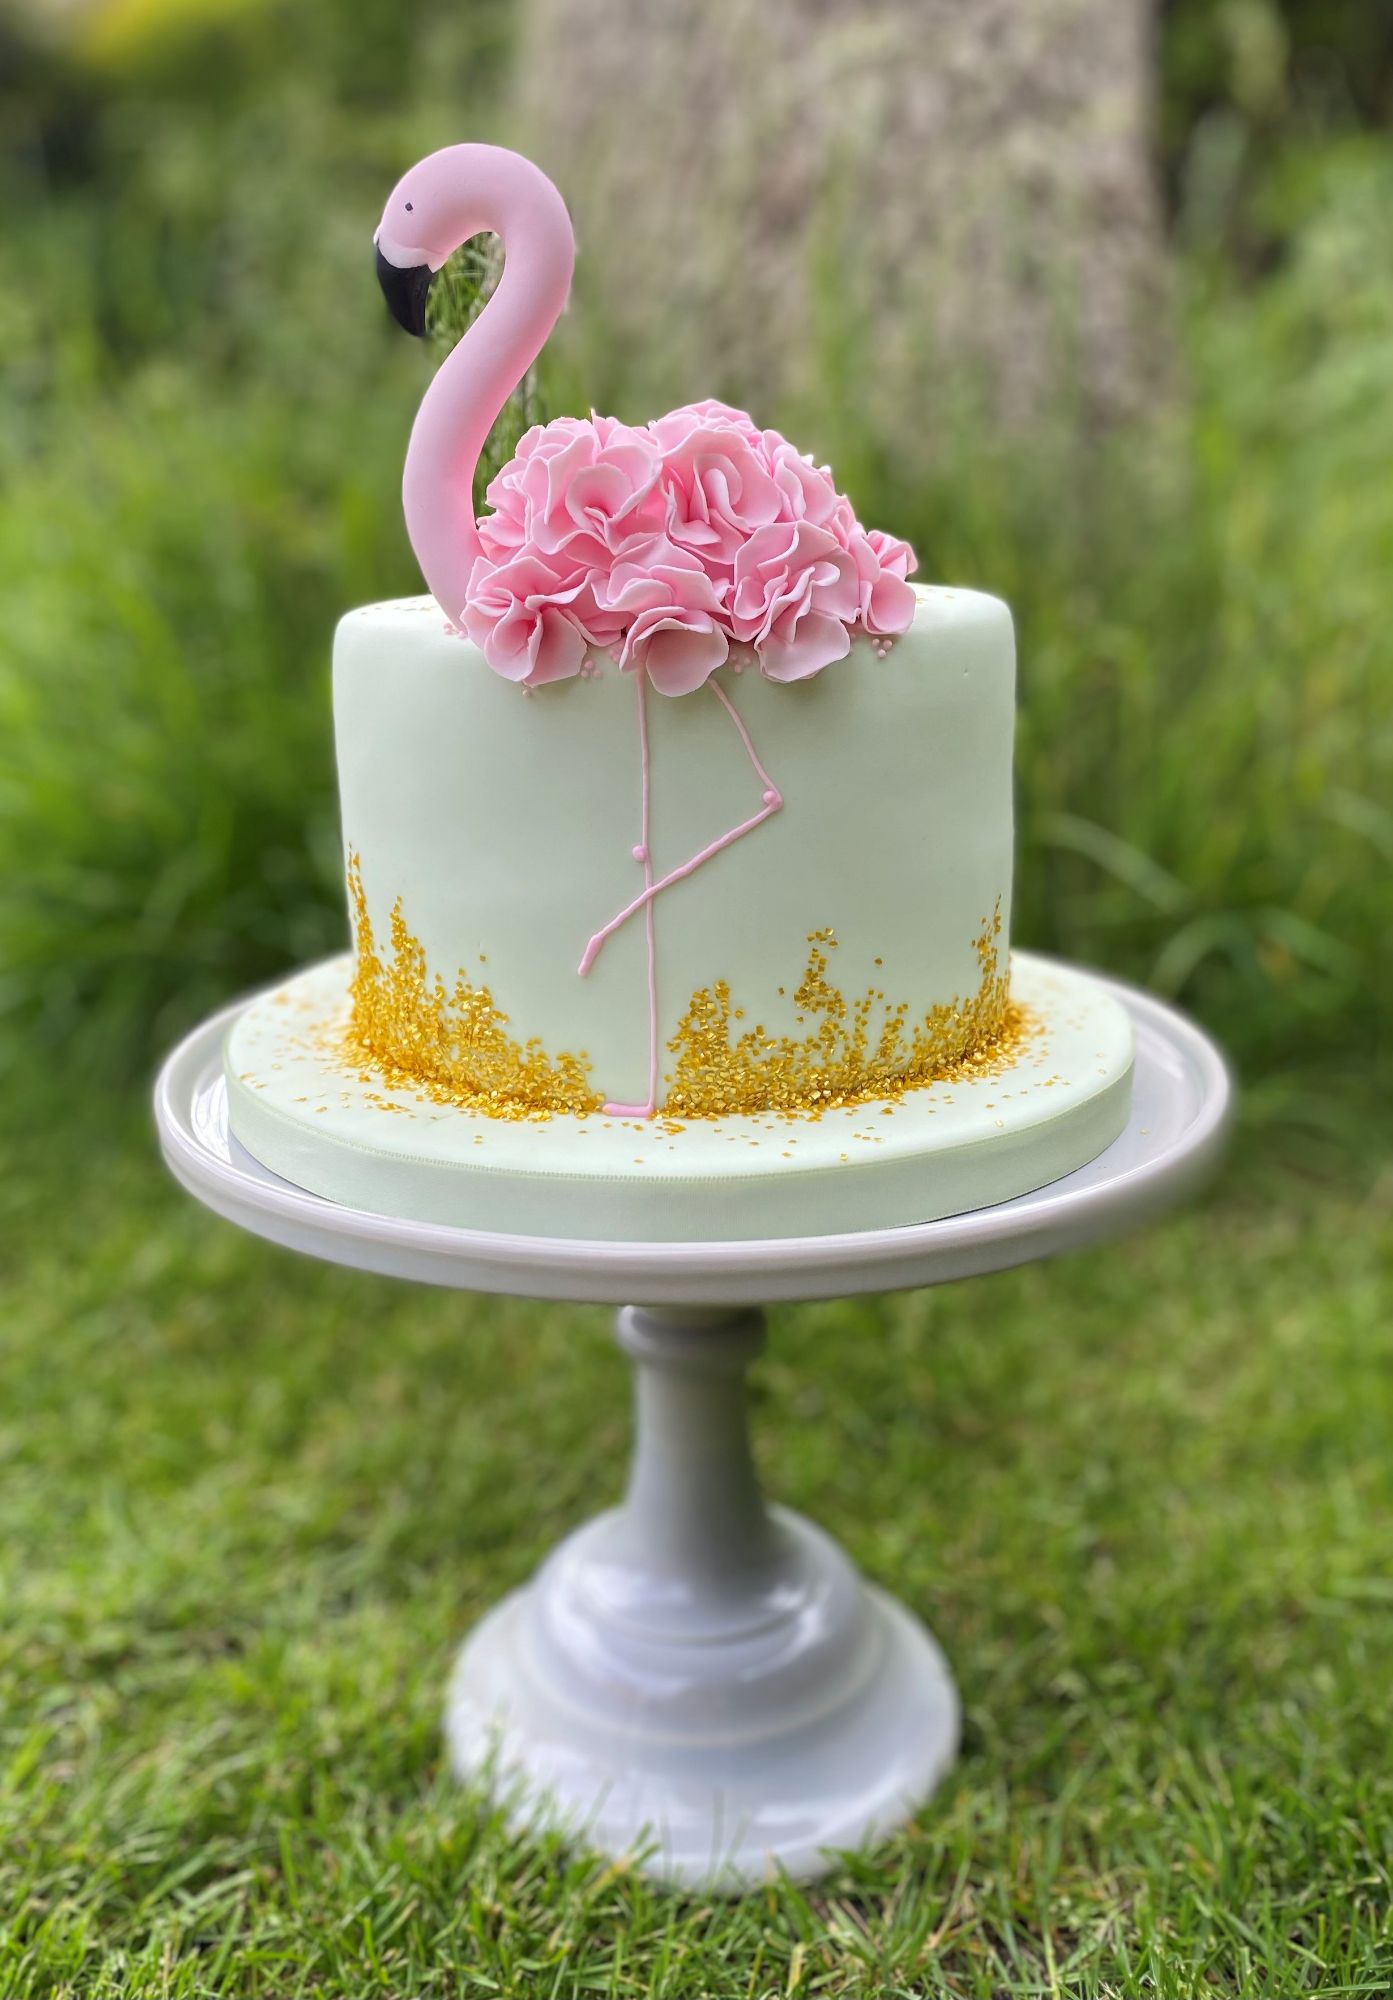 Helen Jane Cake Design - birthday 2